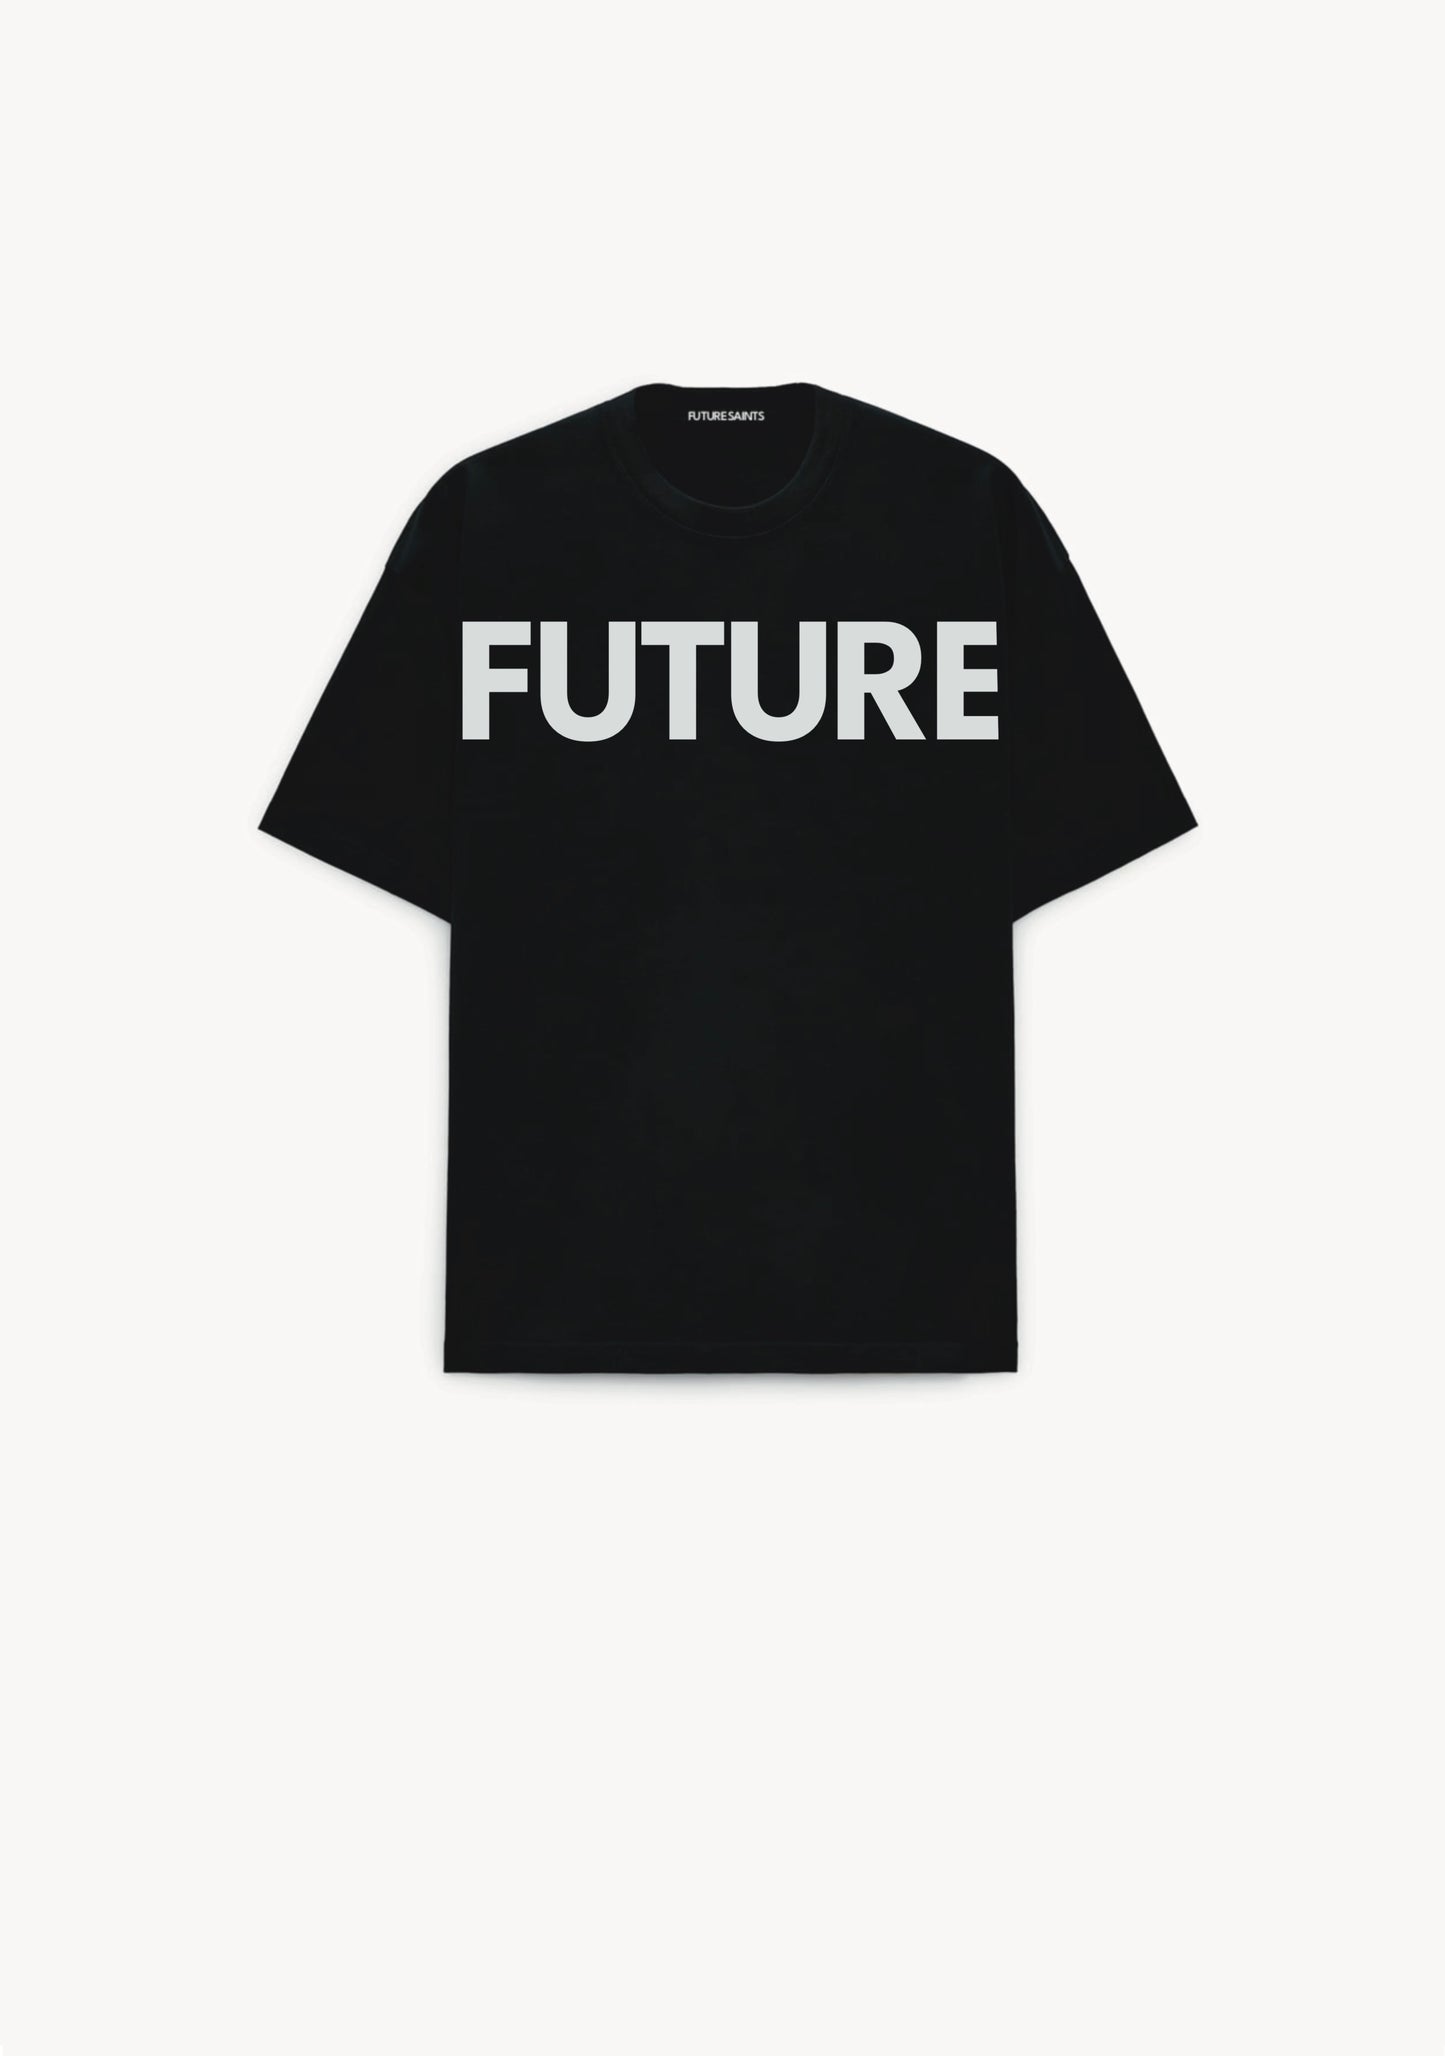 Future Signature tshirts